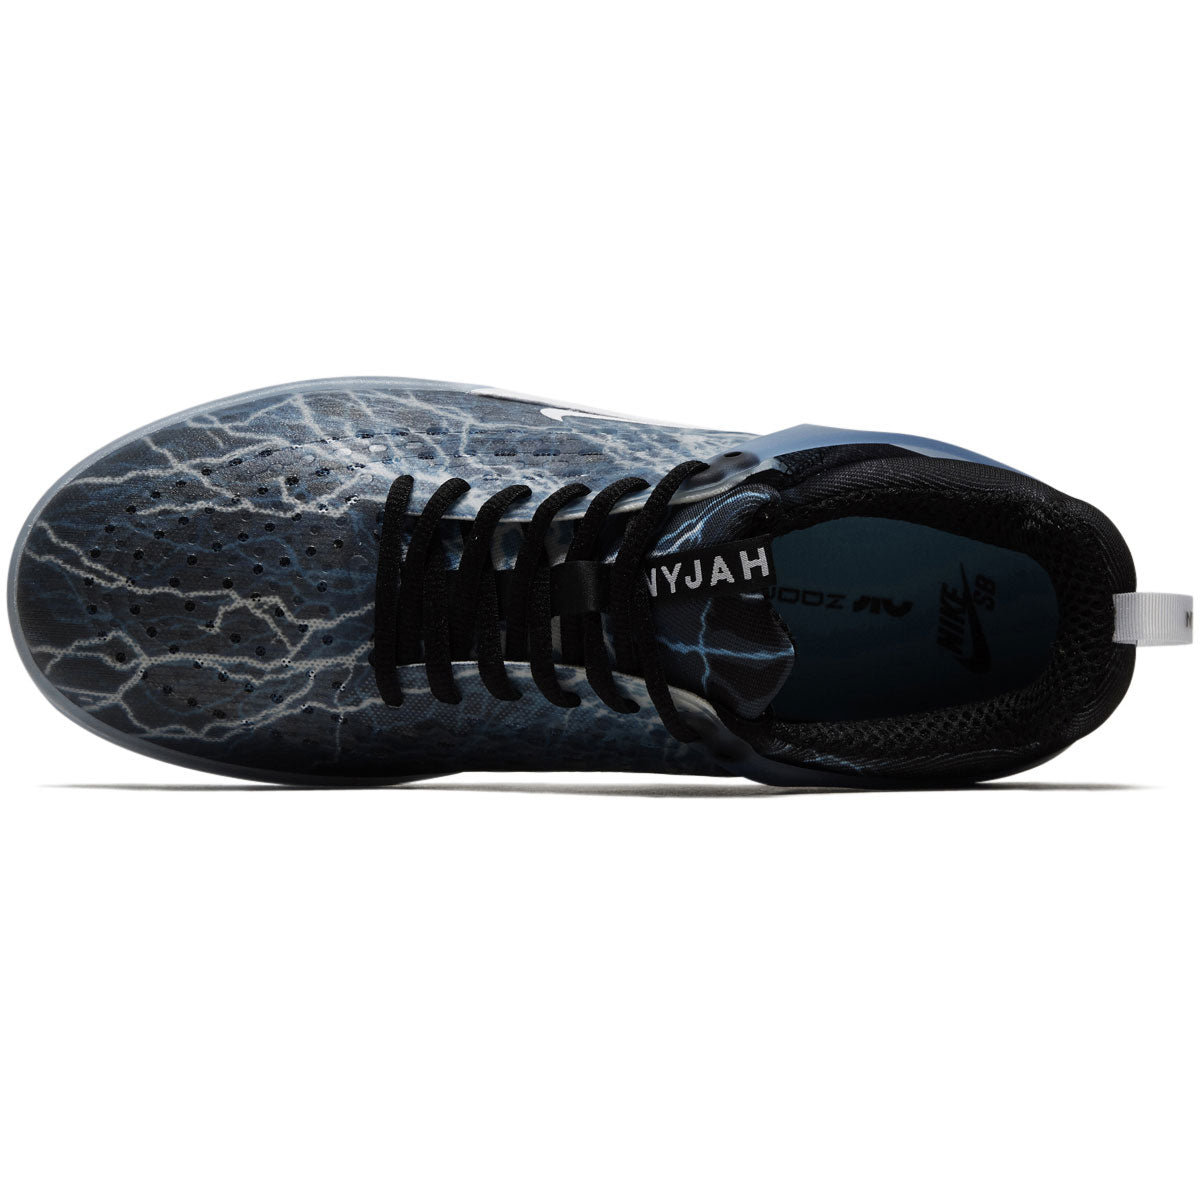 Nike SB Nyjah 3 Premium Shoes - Black/White/Deep Royal/White image 3